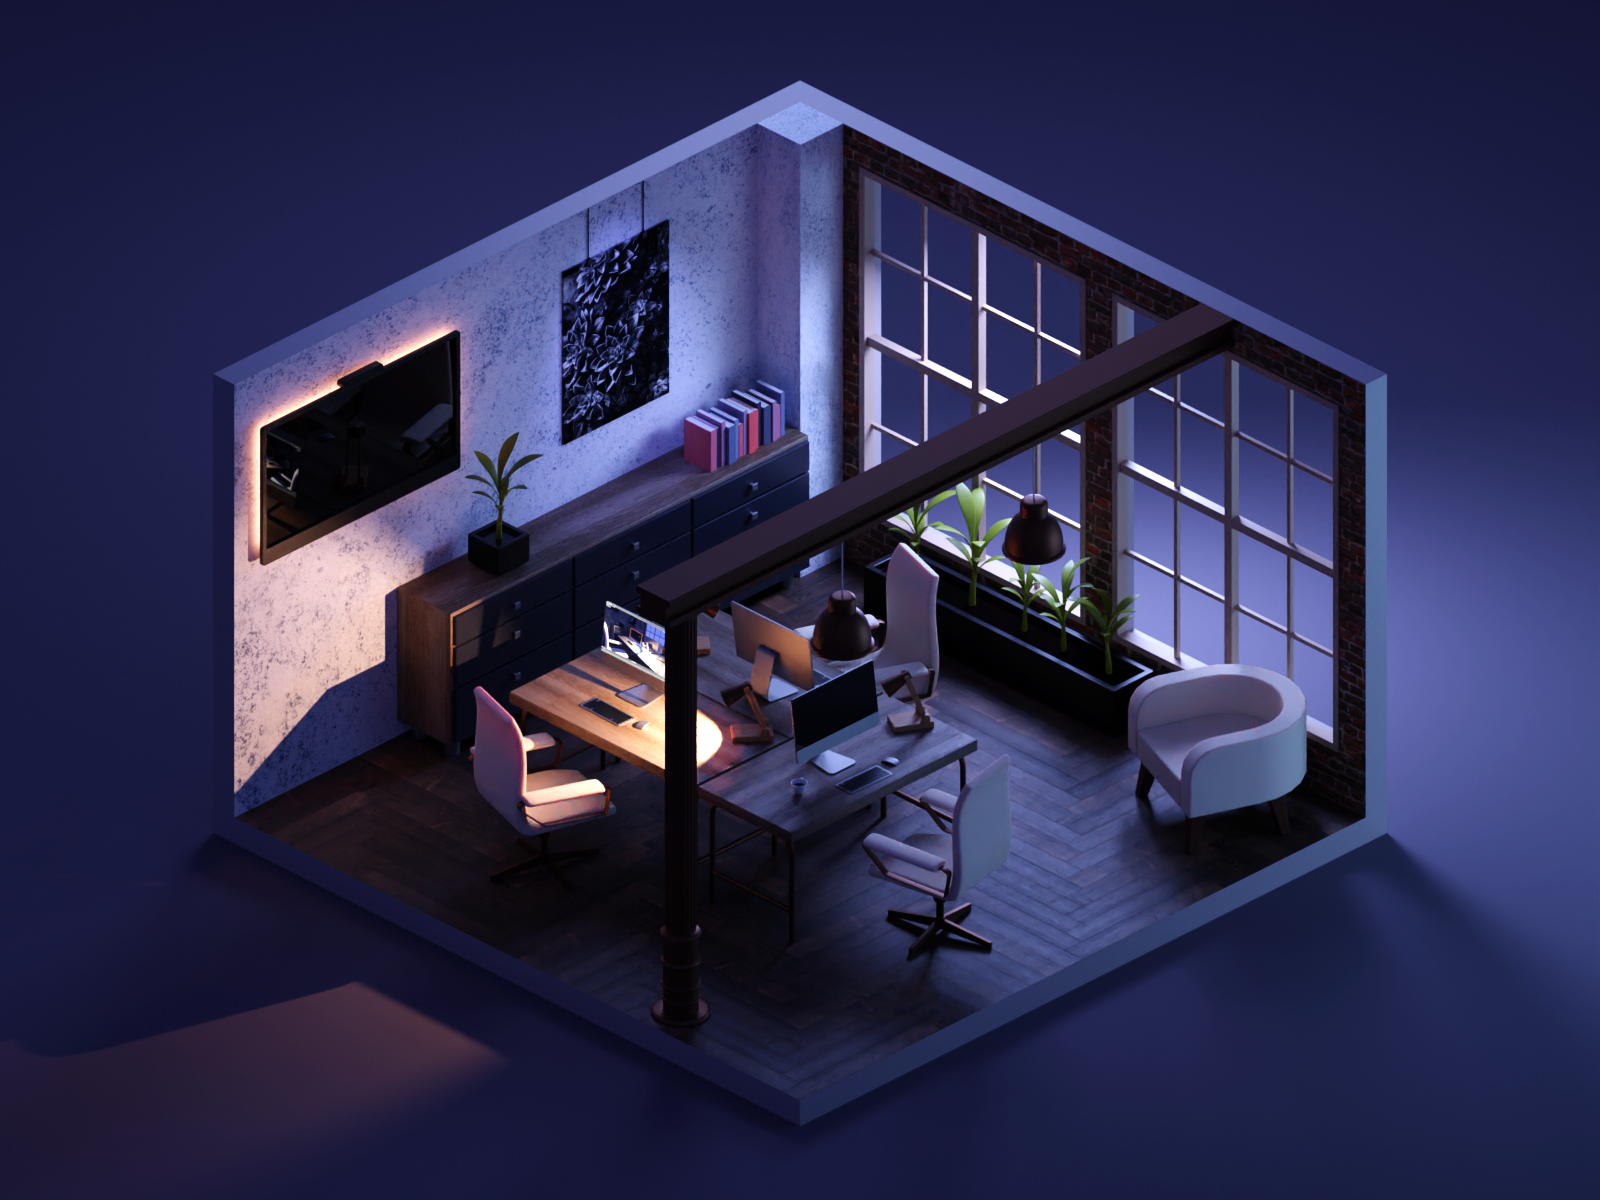 Night Shift studio office room lowpolyart low poly diorama isometric lowpoly render blender illustration 3d